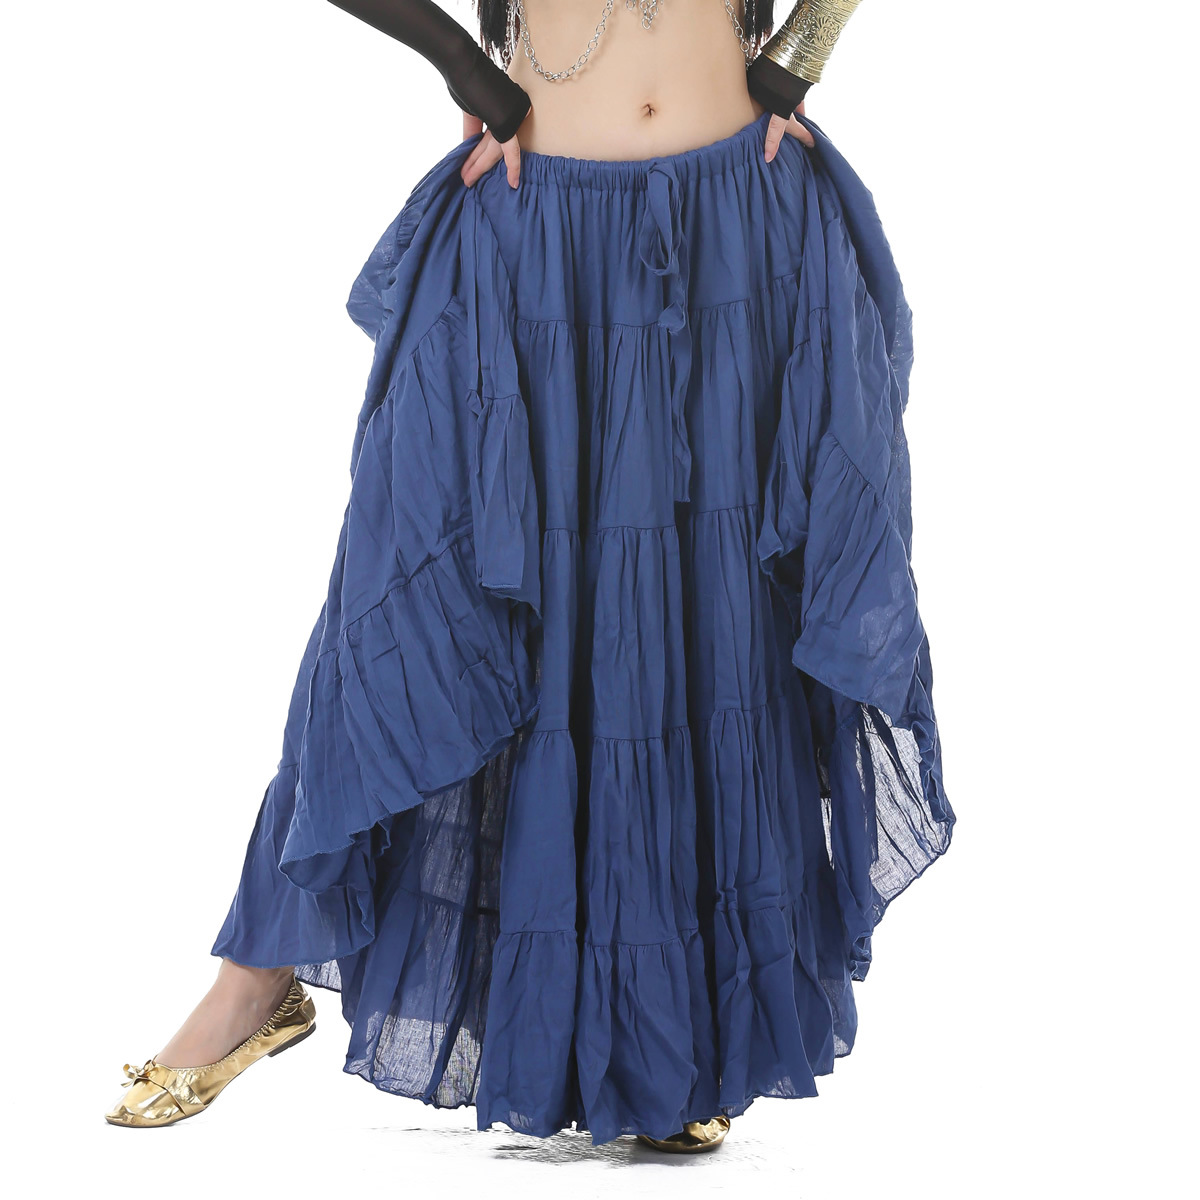 Performance tribal style dancewear linen belly dance long skirt more colors